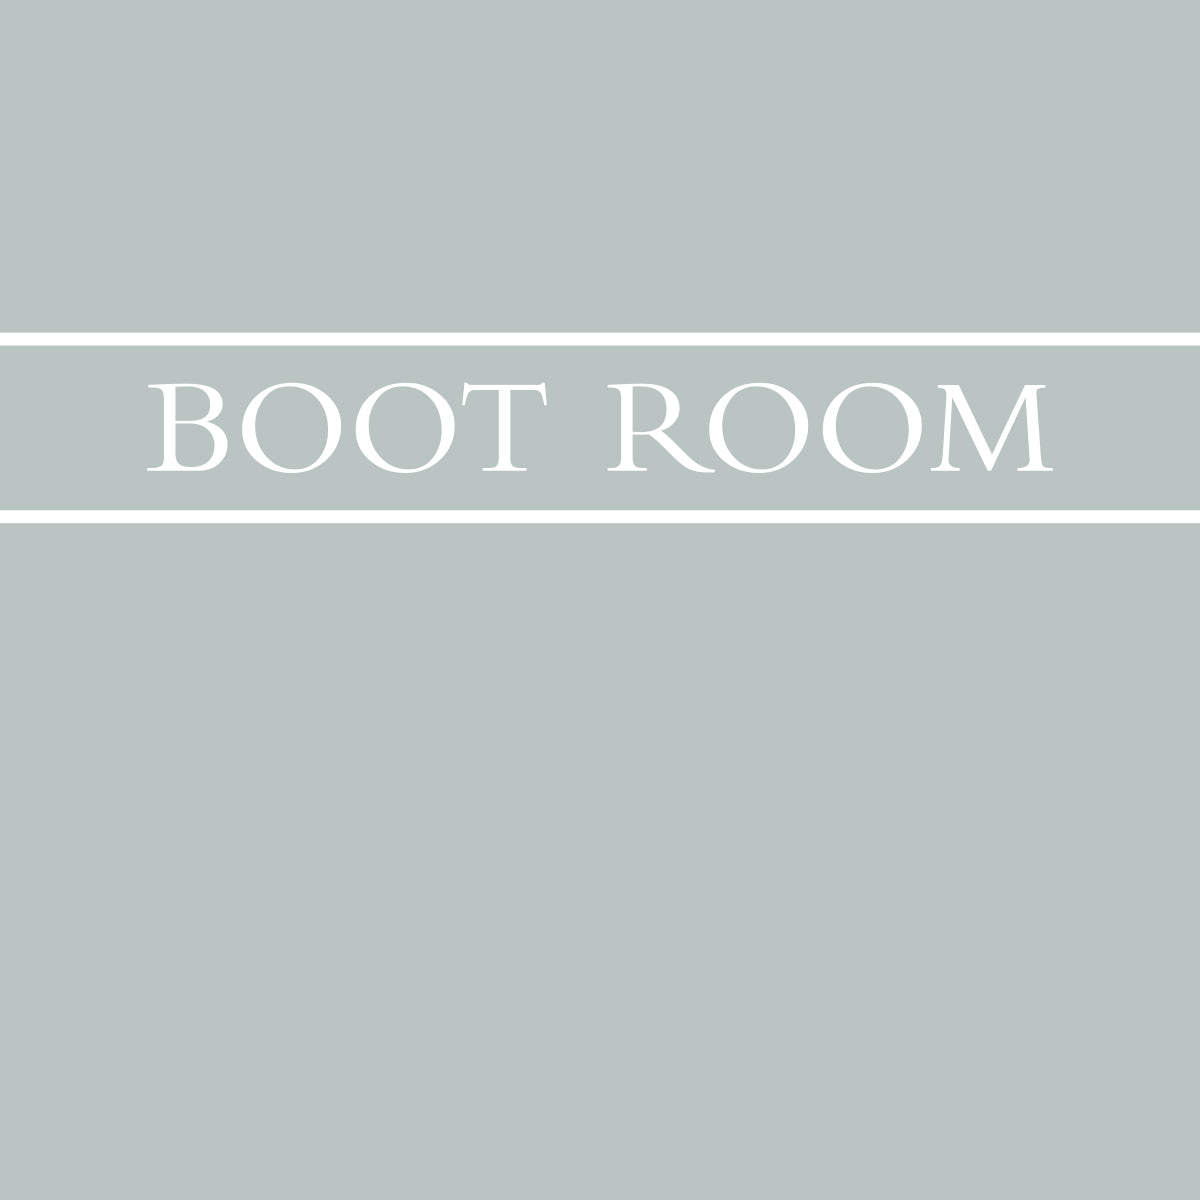 Boot Room Stripe.